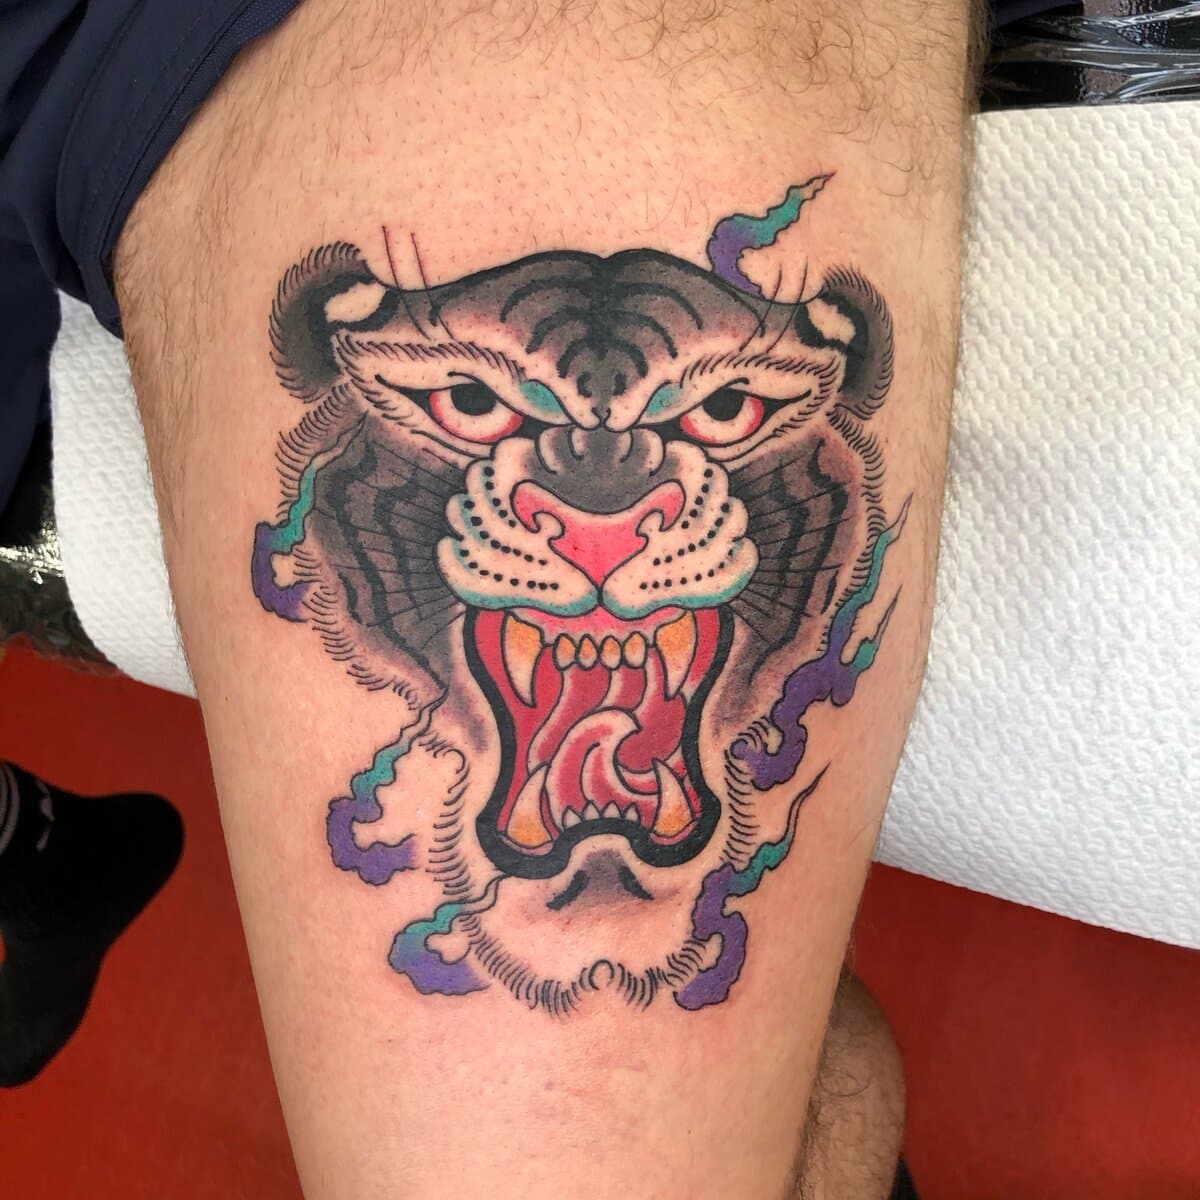 paolo-esse-tattoo-artist-tiger-arm